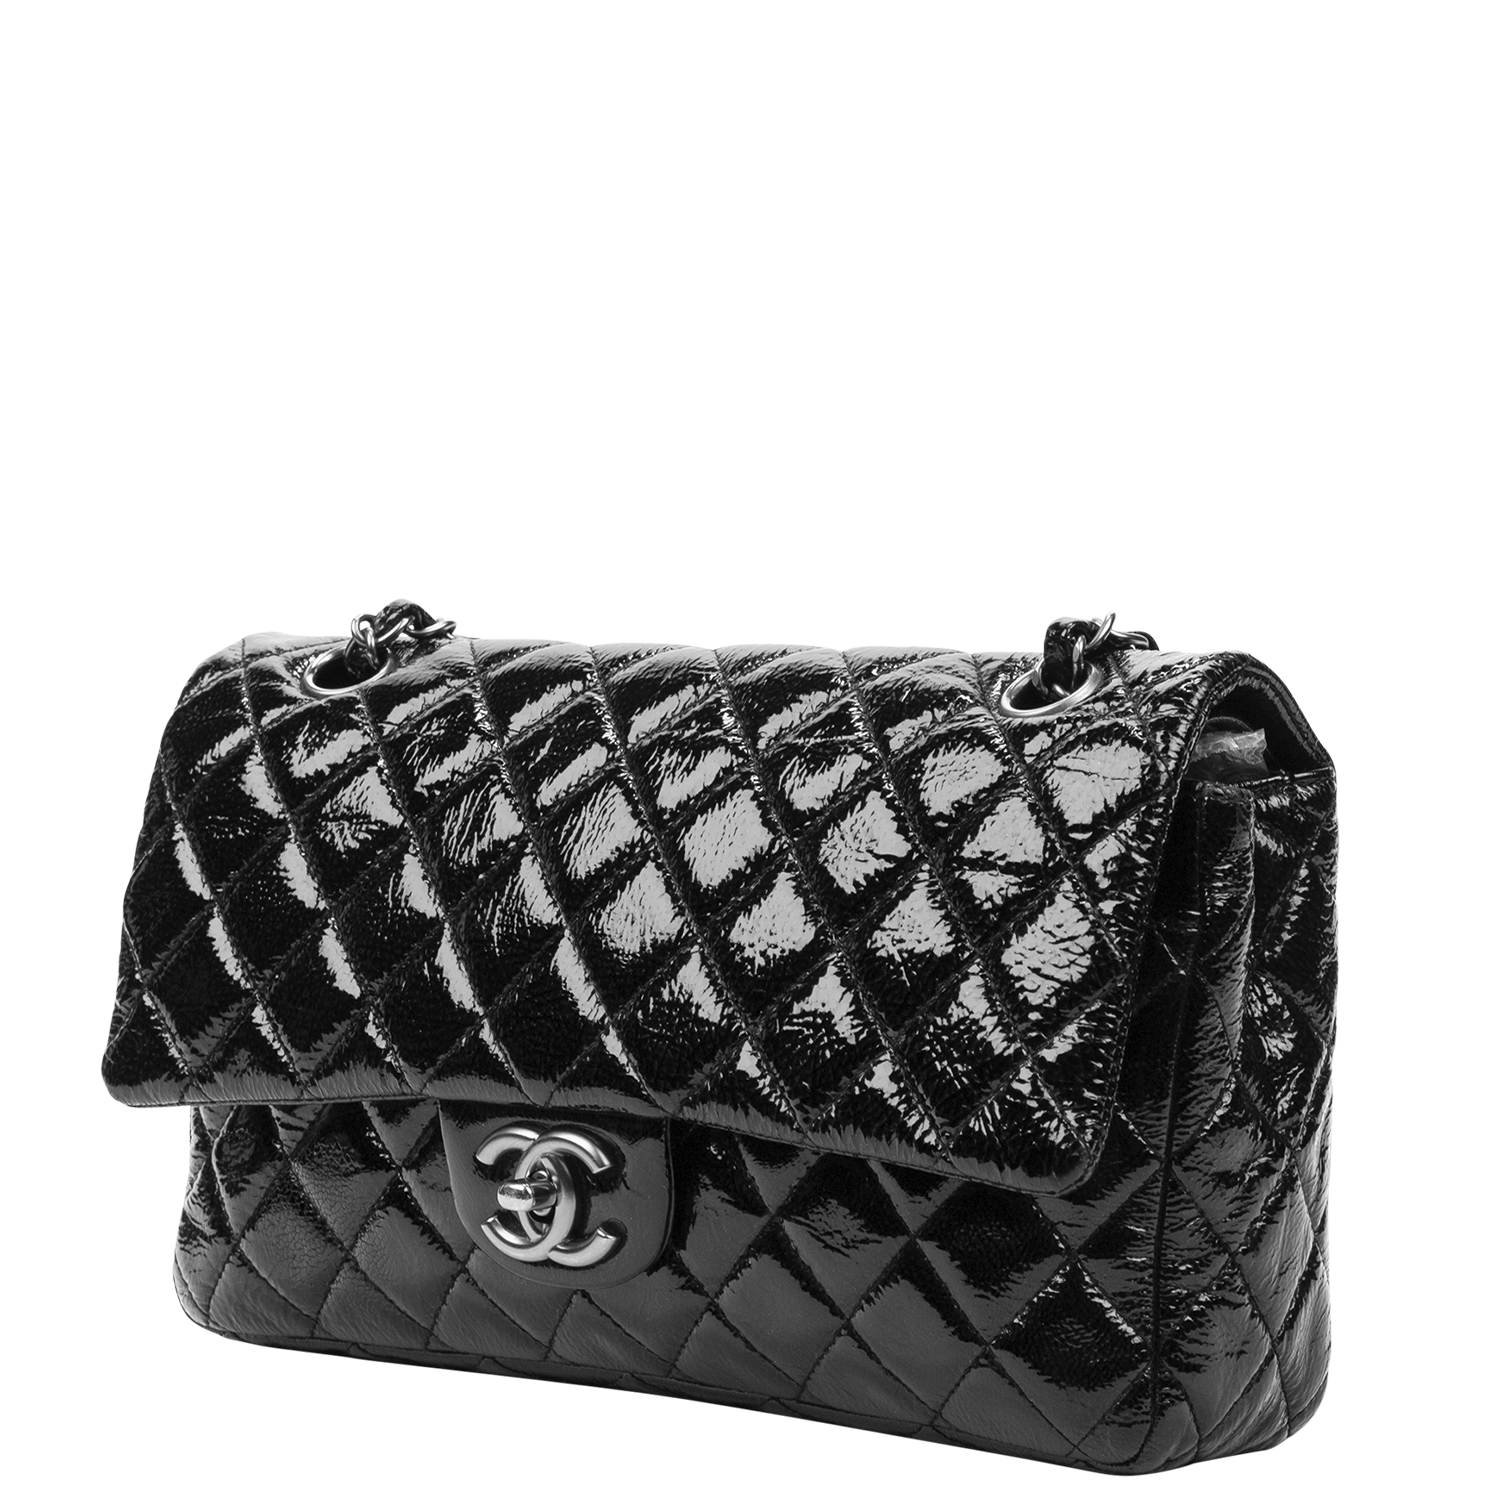 Chanel Black Patent Small Double Flap Bag - shop 